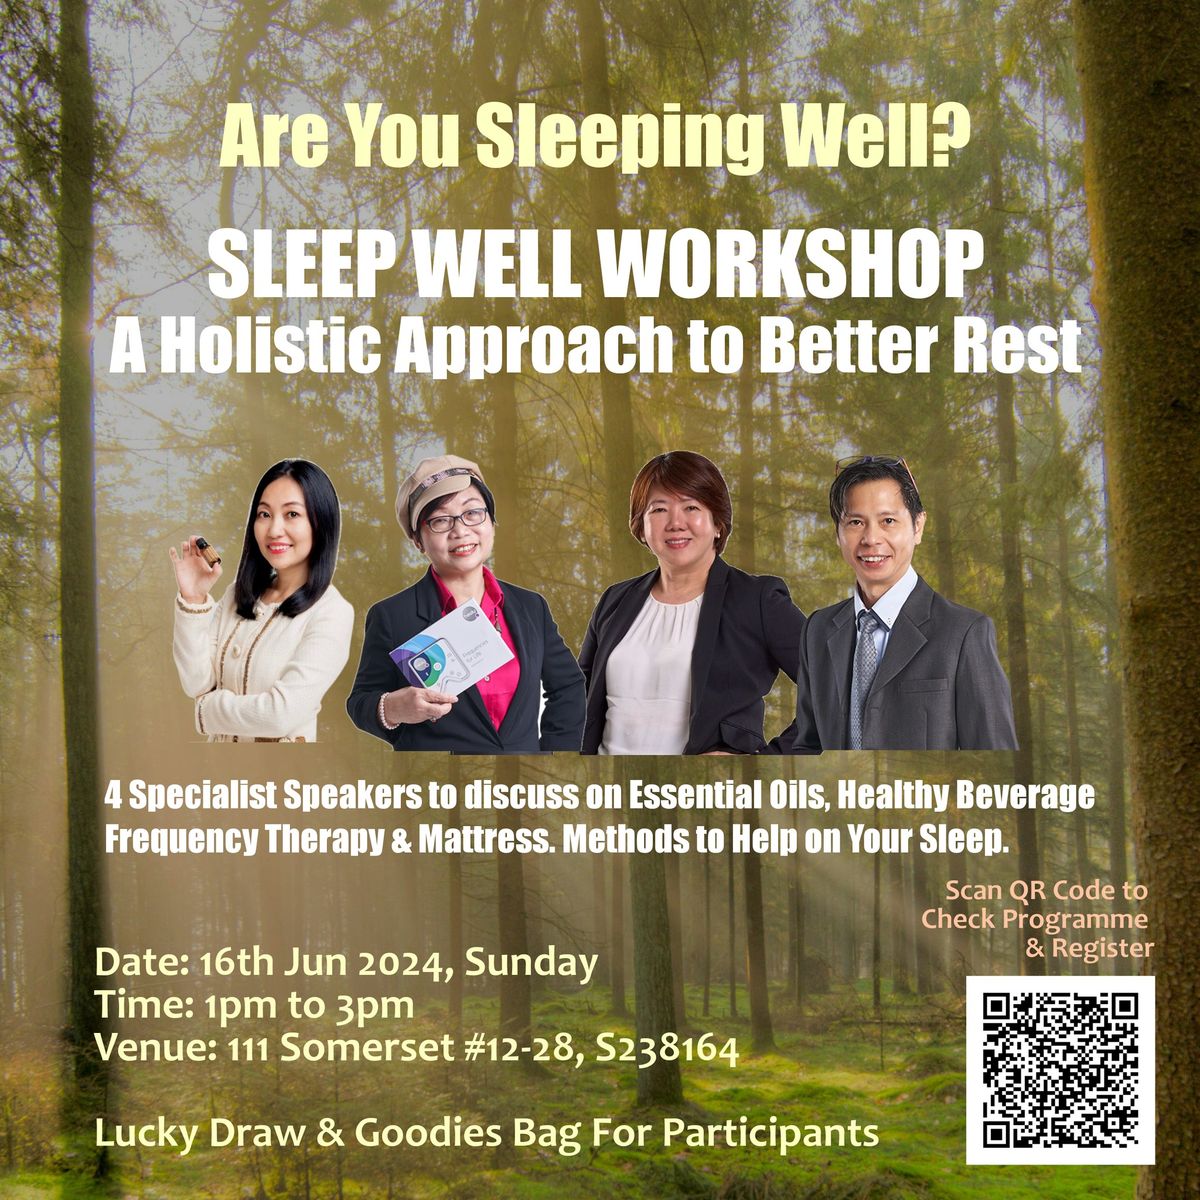 SLEEP WELL WORKSHOP - A Holistic Approach to Better Rest